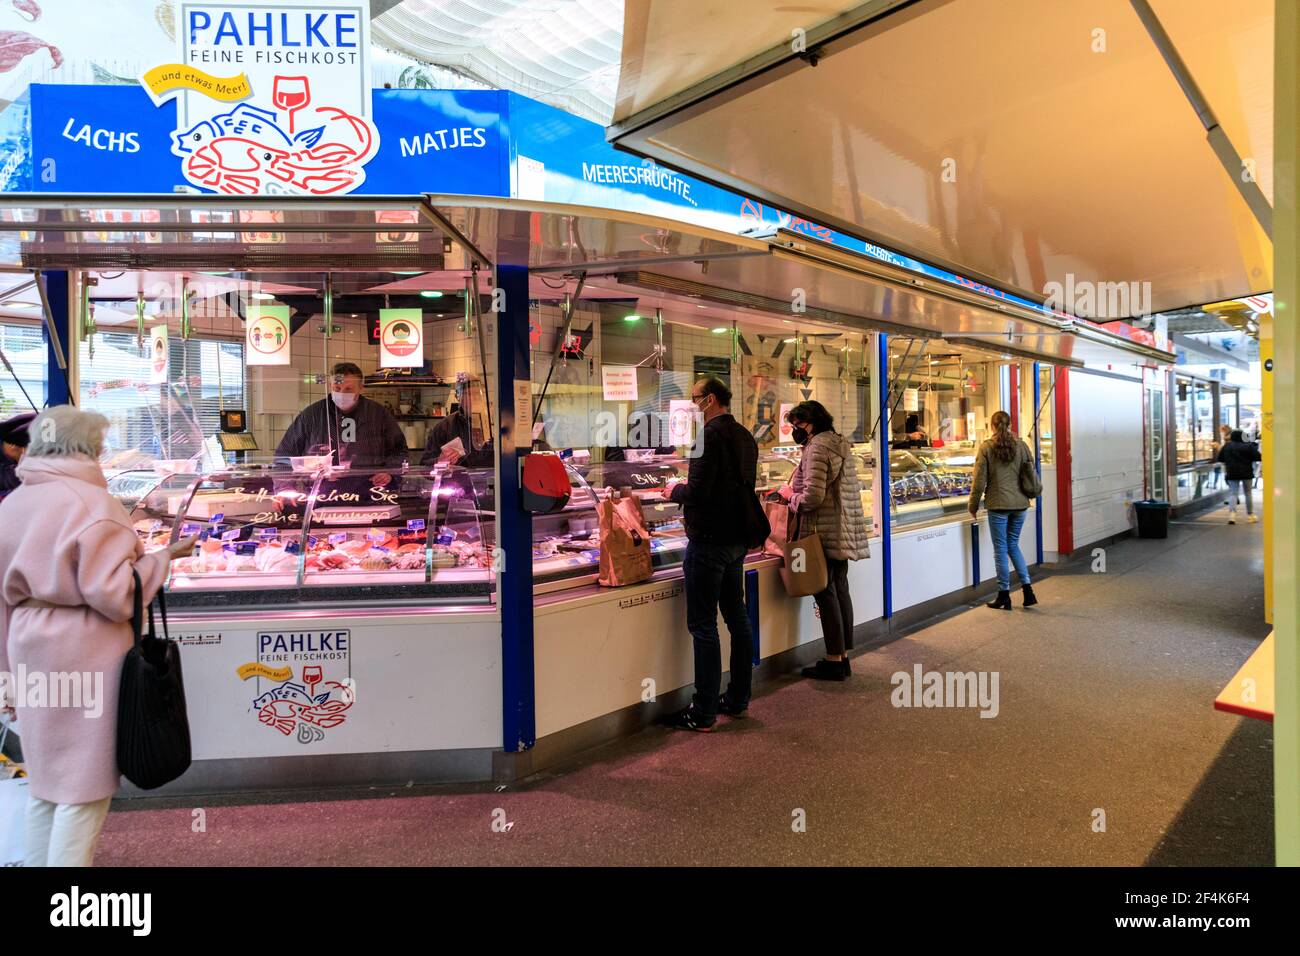 Pahlke fish stall, fishmonger at Carlsplatz Markt indoor food market,  Dusseldorf, NRW, Germany Stock Photo - Alamy